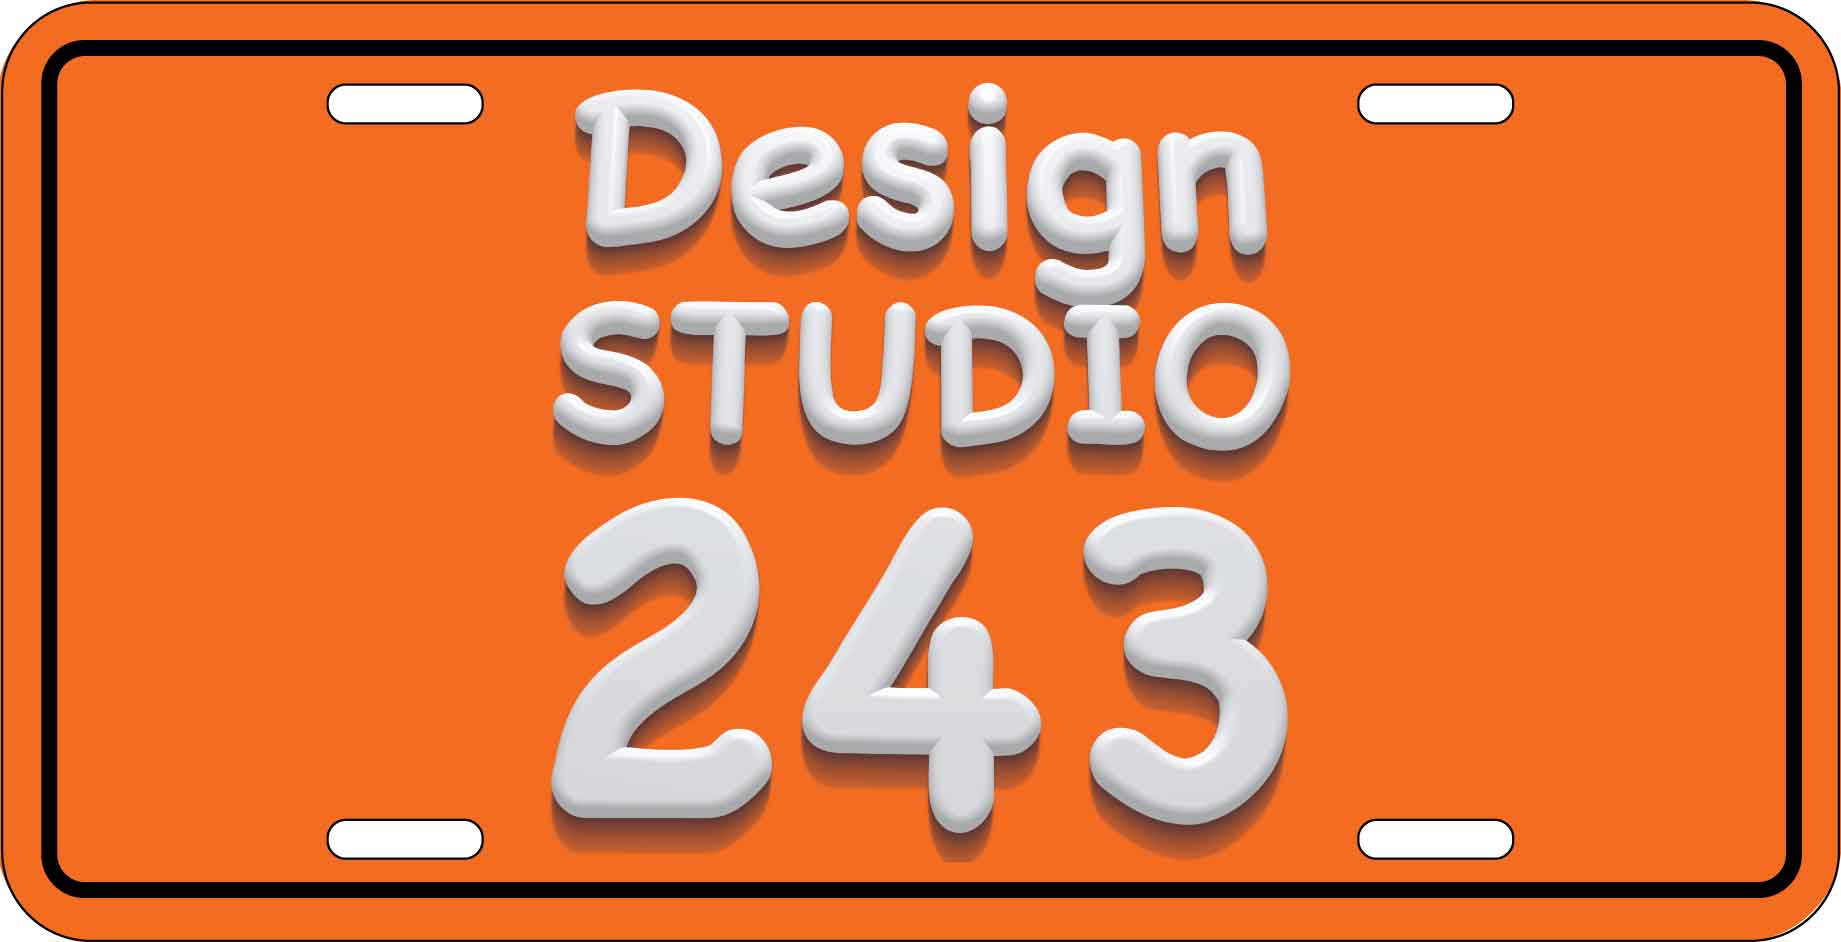 licence-plates-design-studio-243